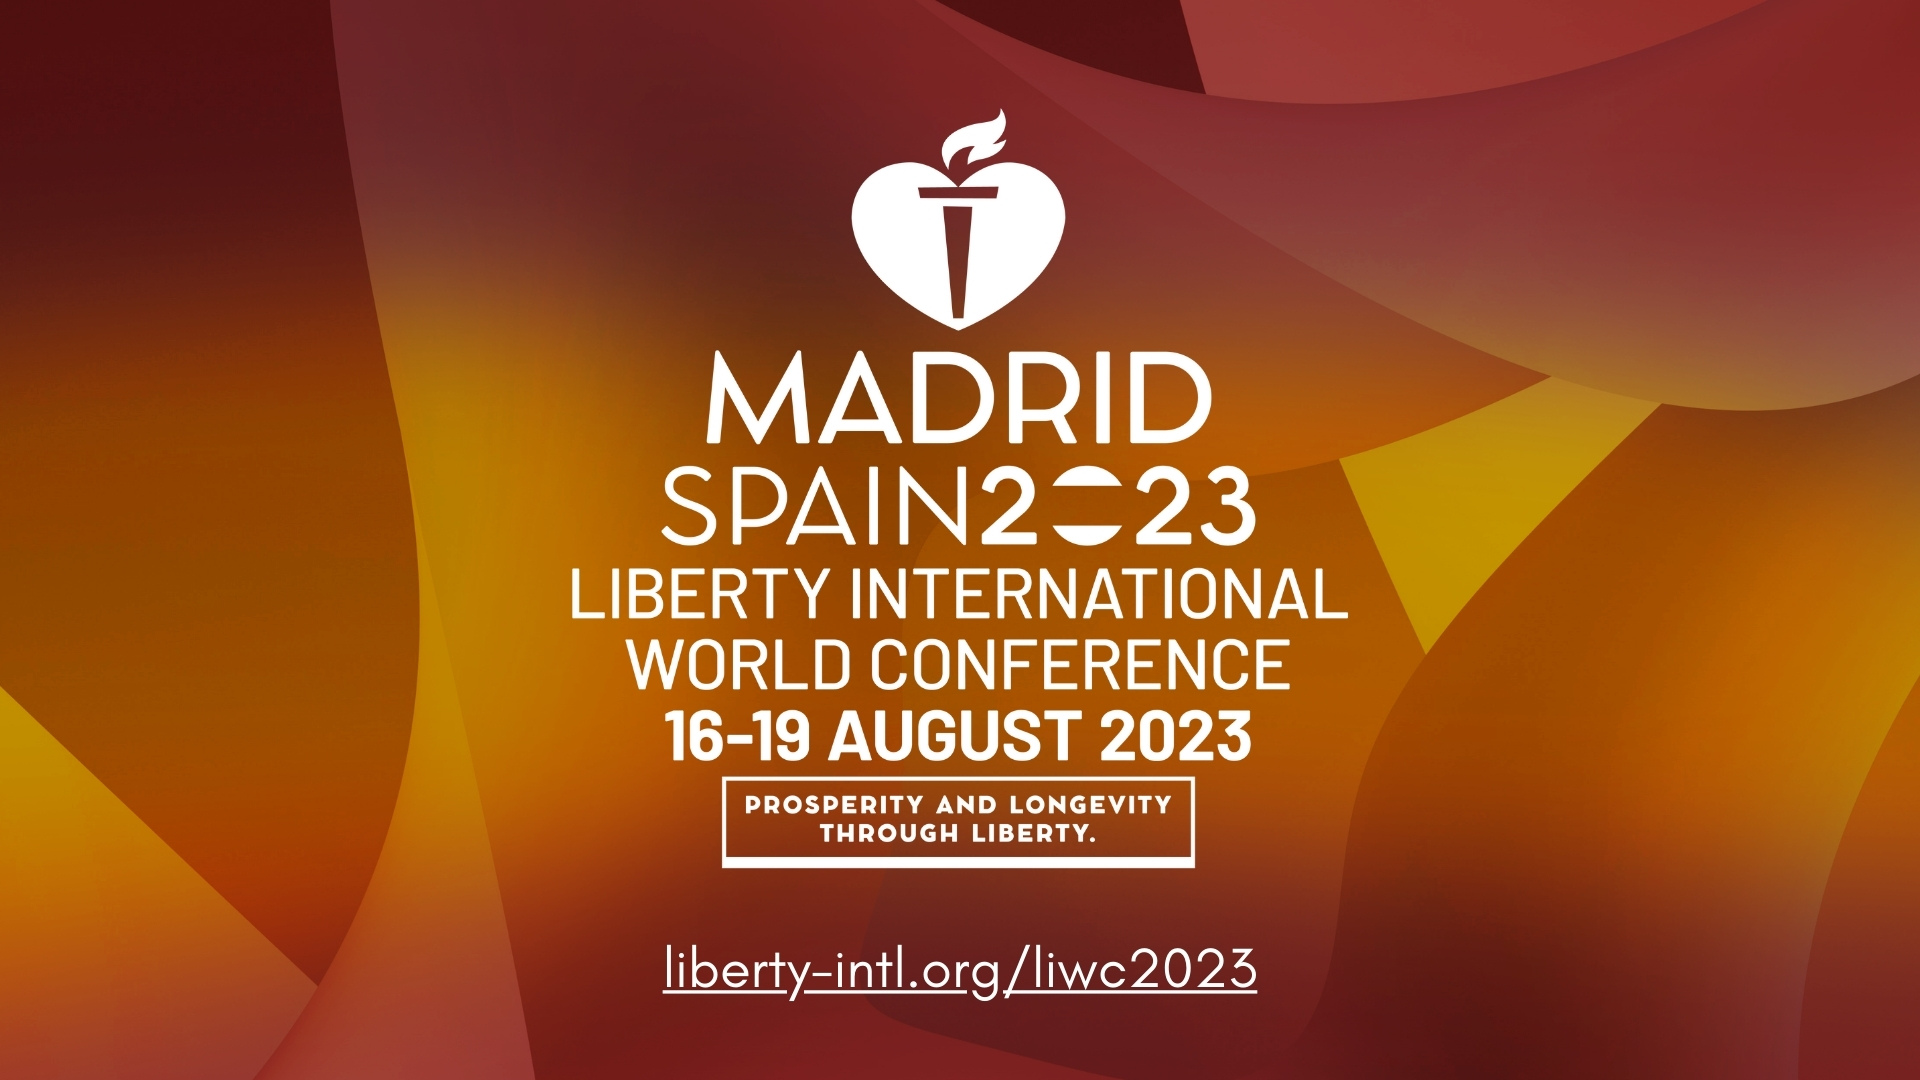 Liberty International World Conference 2023 Madrid 10% discount code!